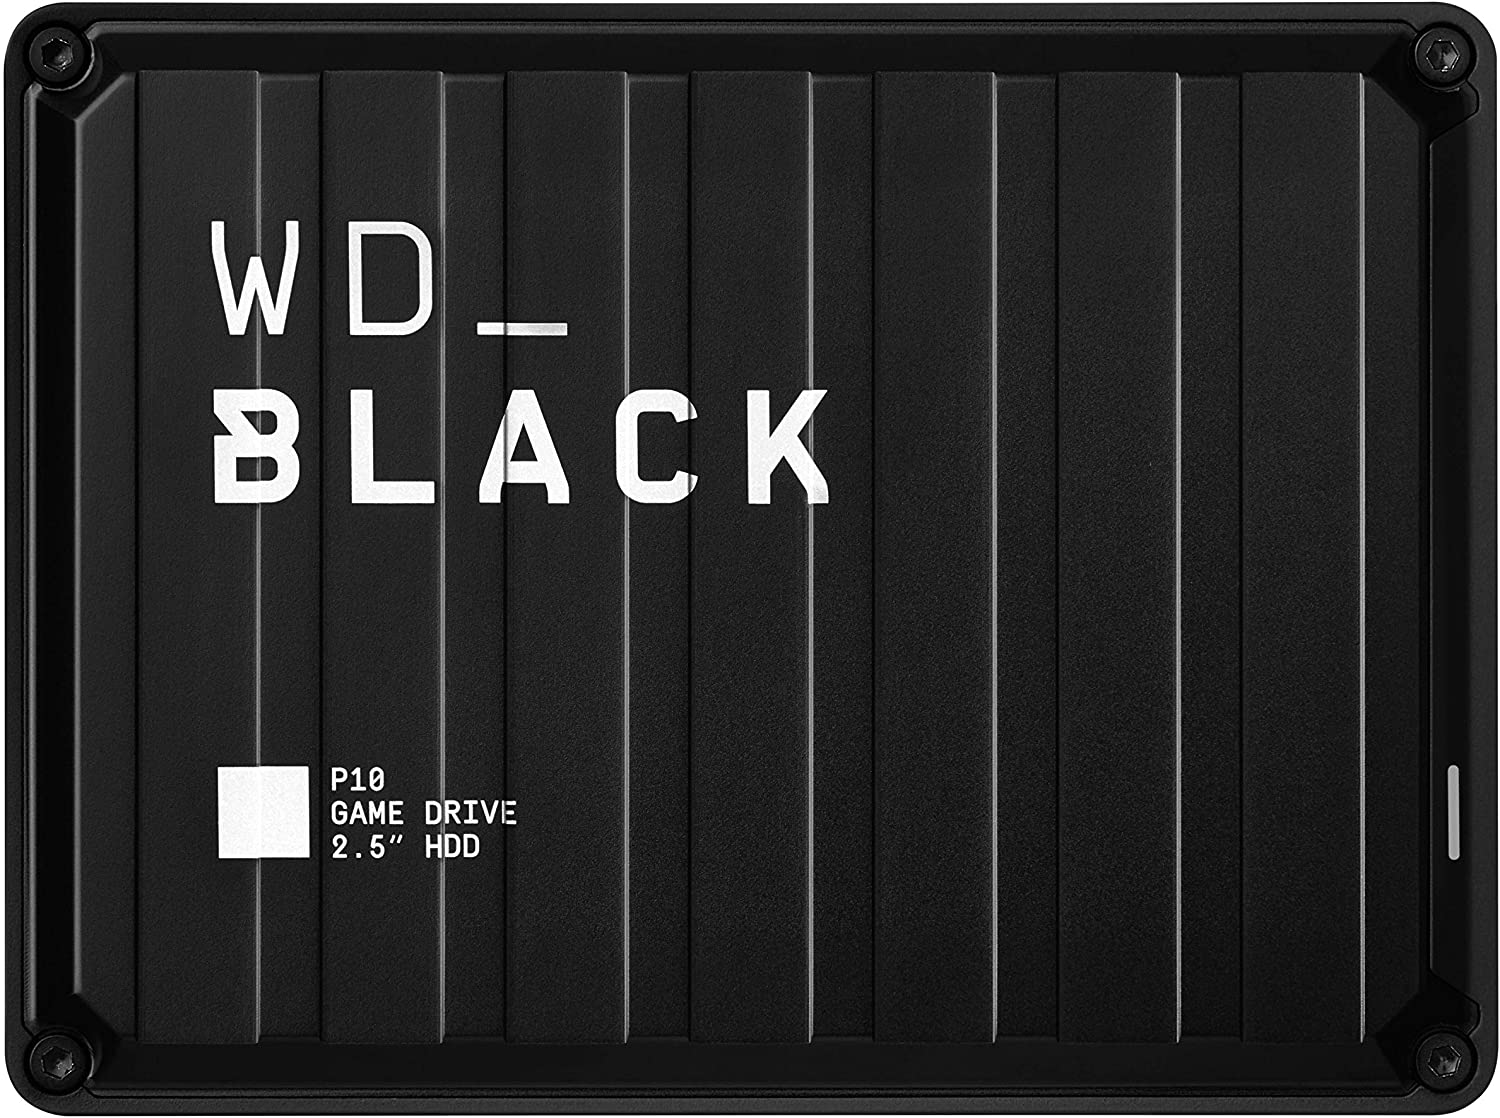 WD Black 5TB External HDD